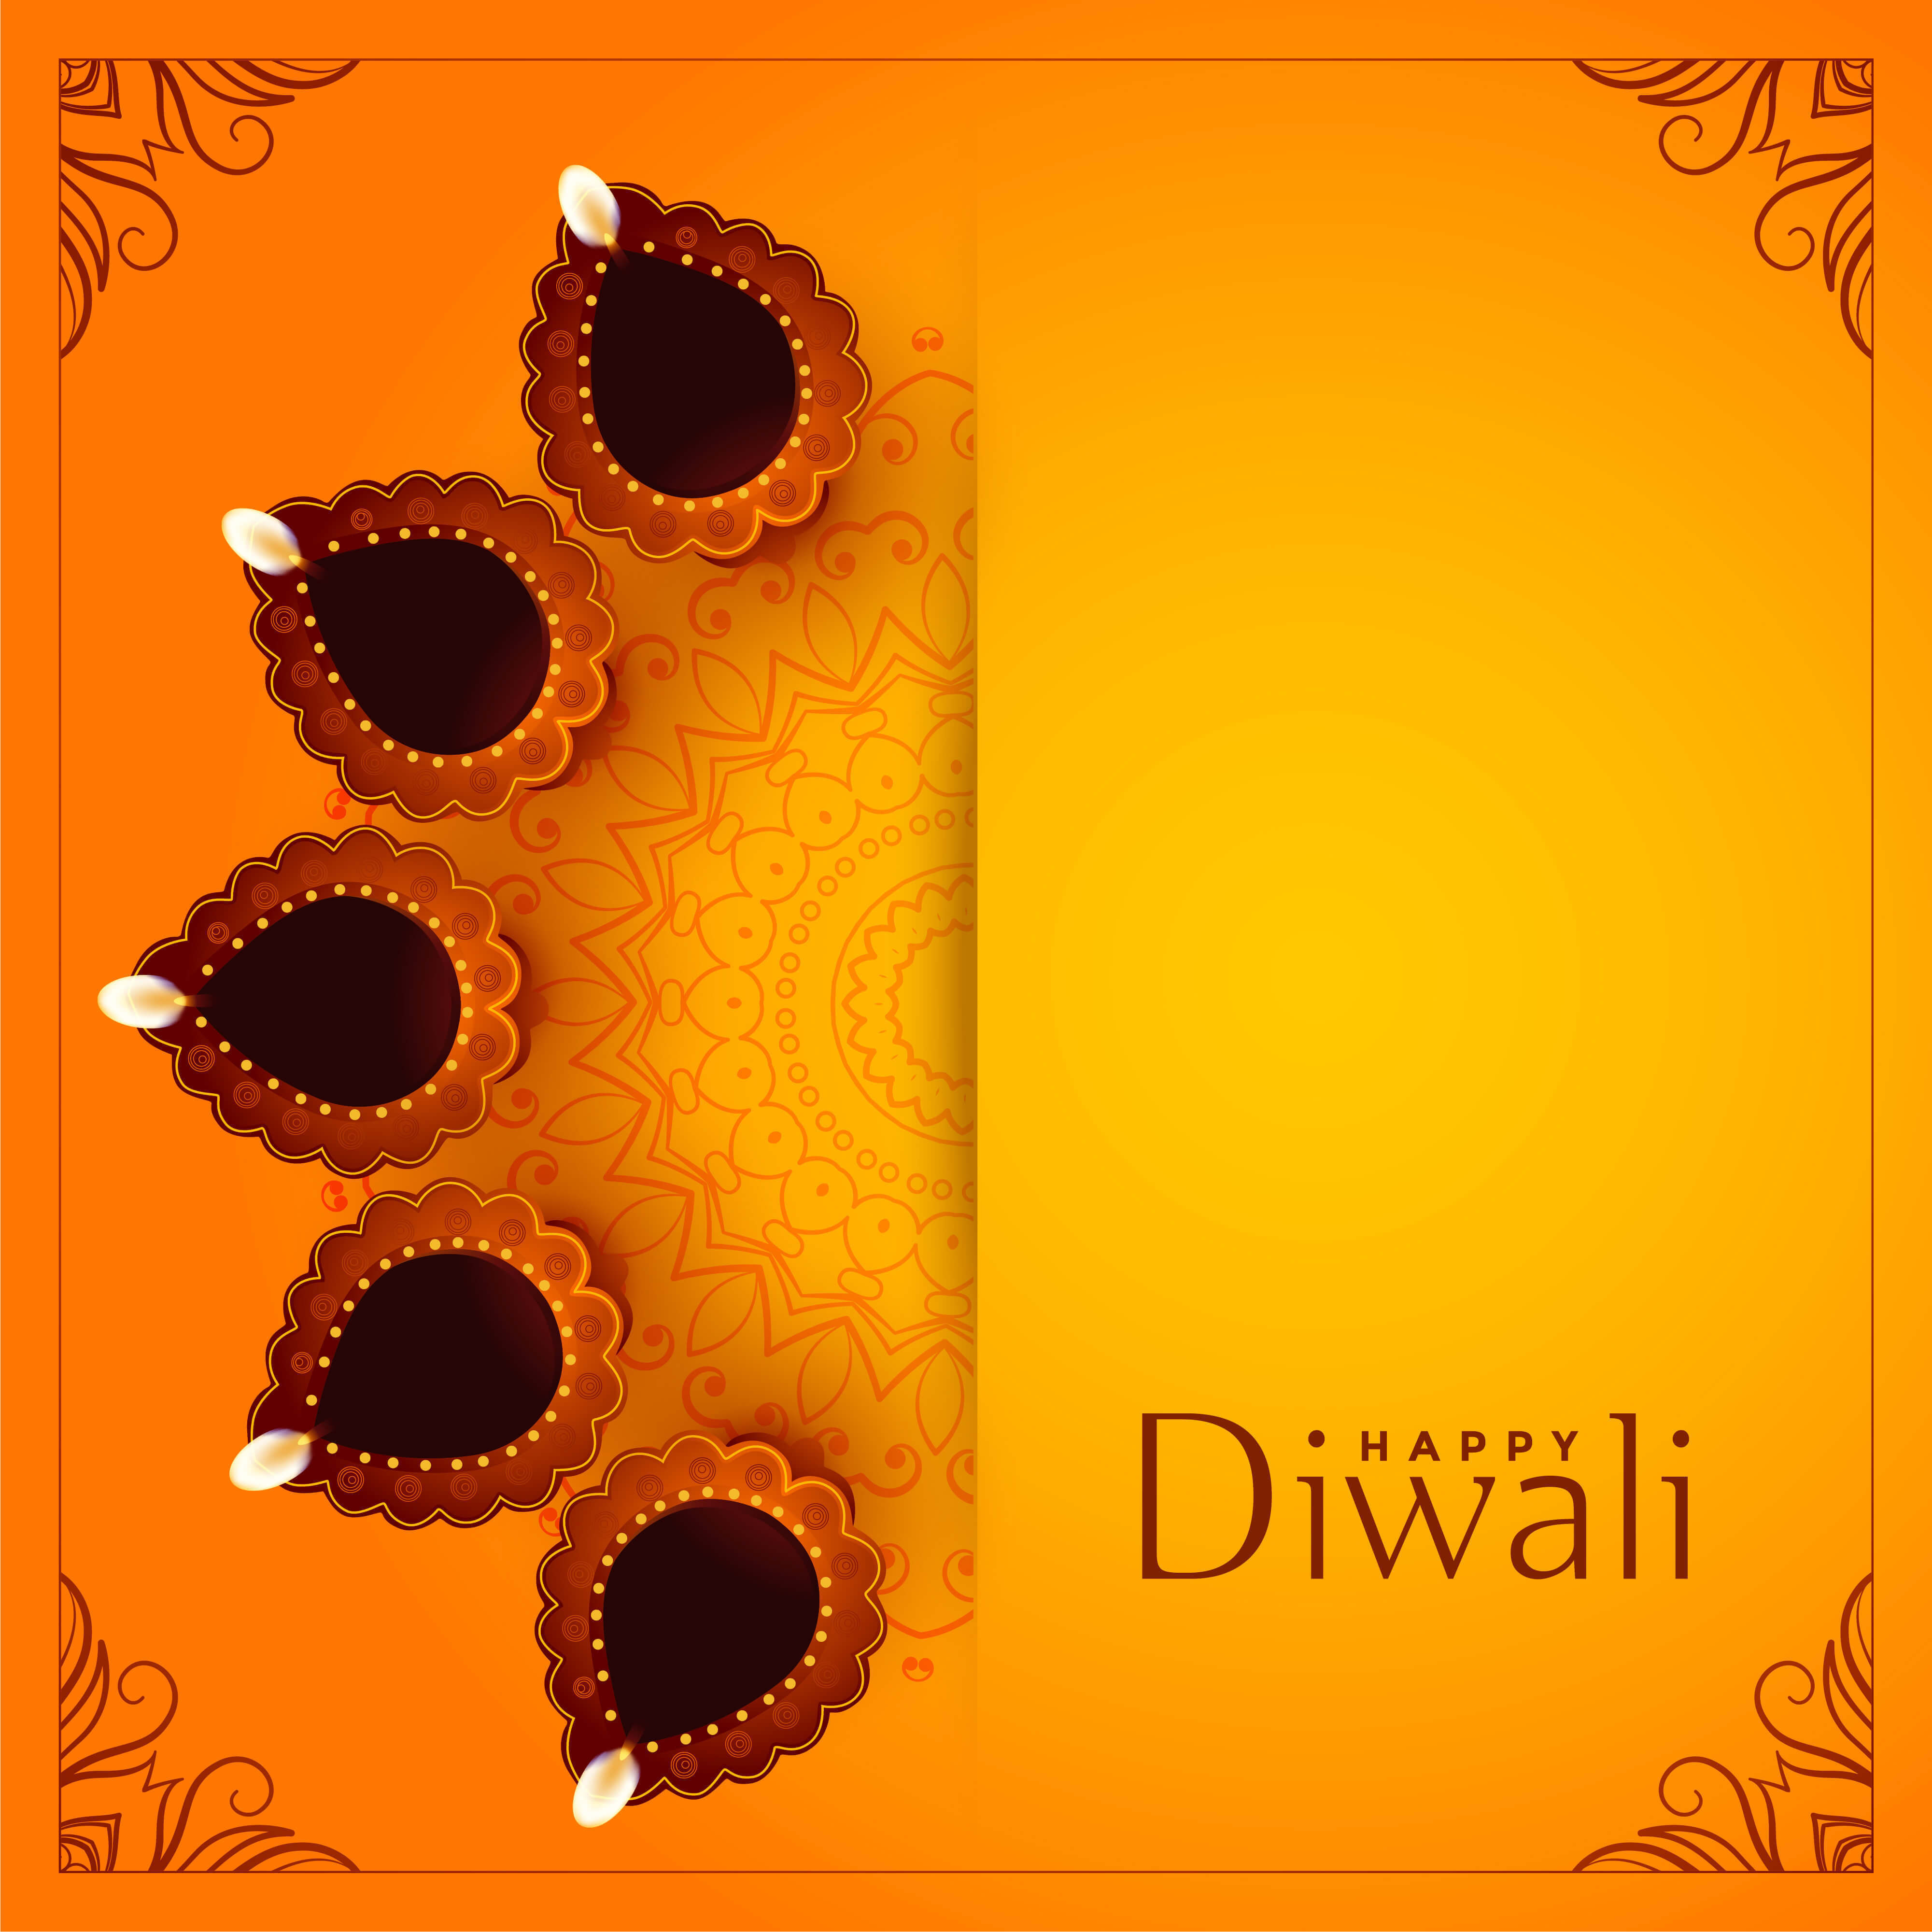 Right way to celebrate Diwali